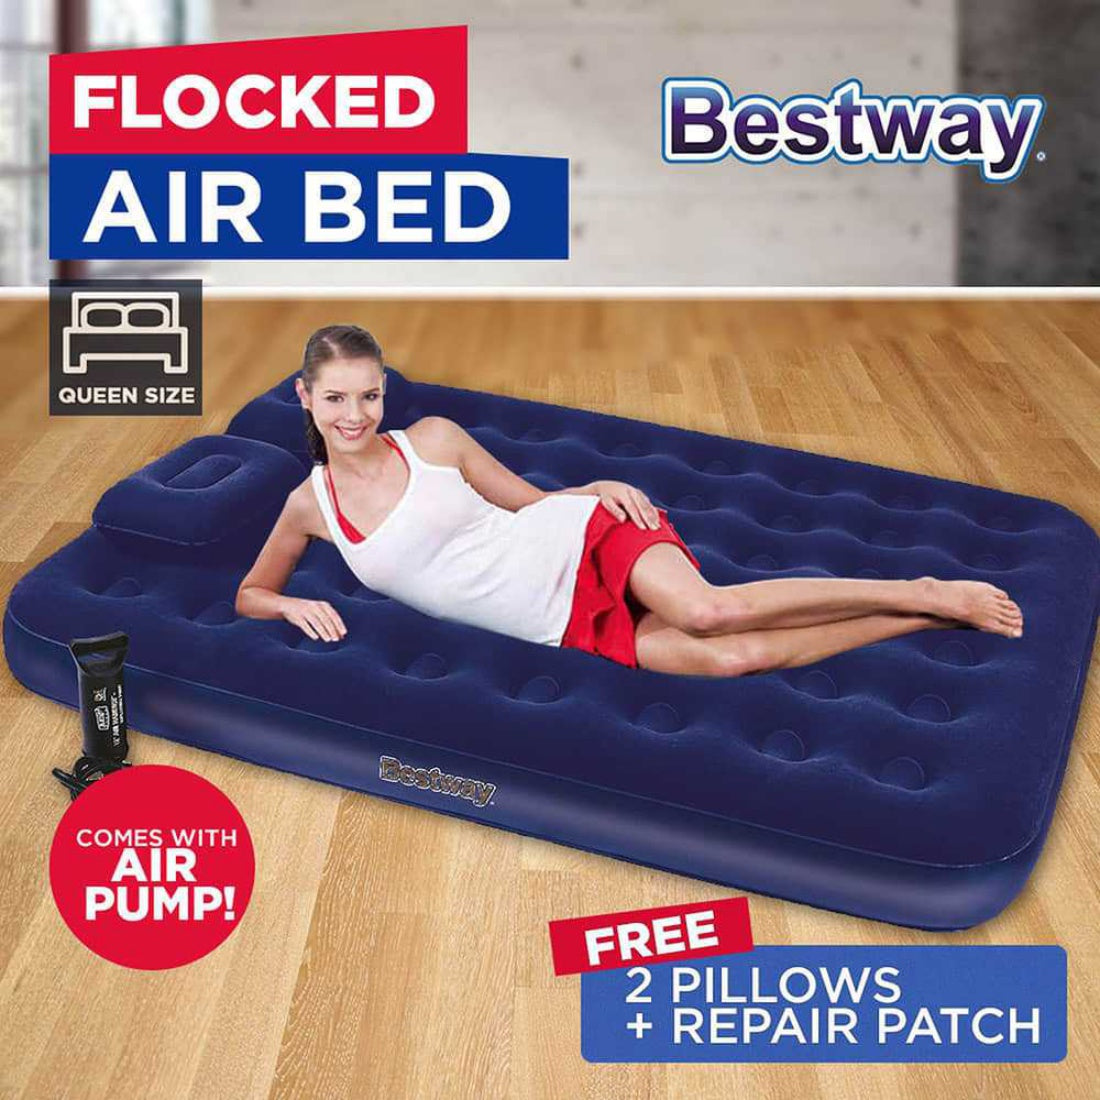 Bestway Queen Size Flocked Air Bed + Air Pump